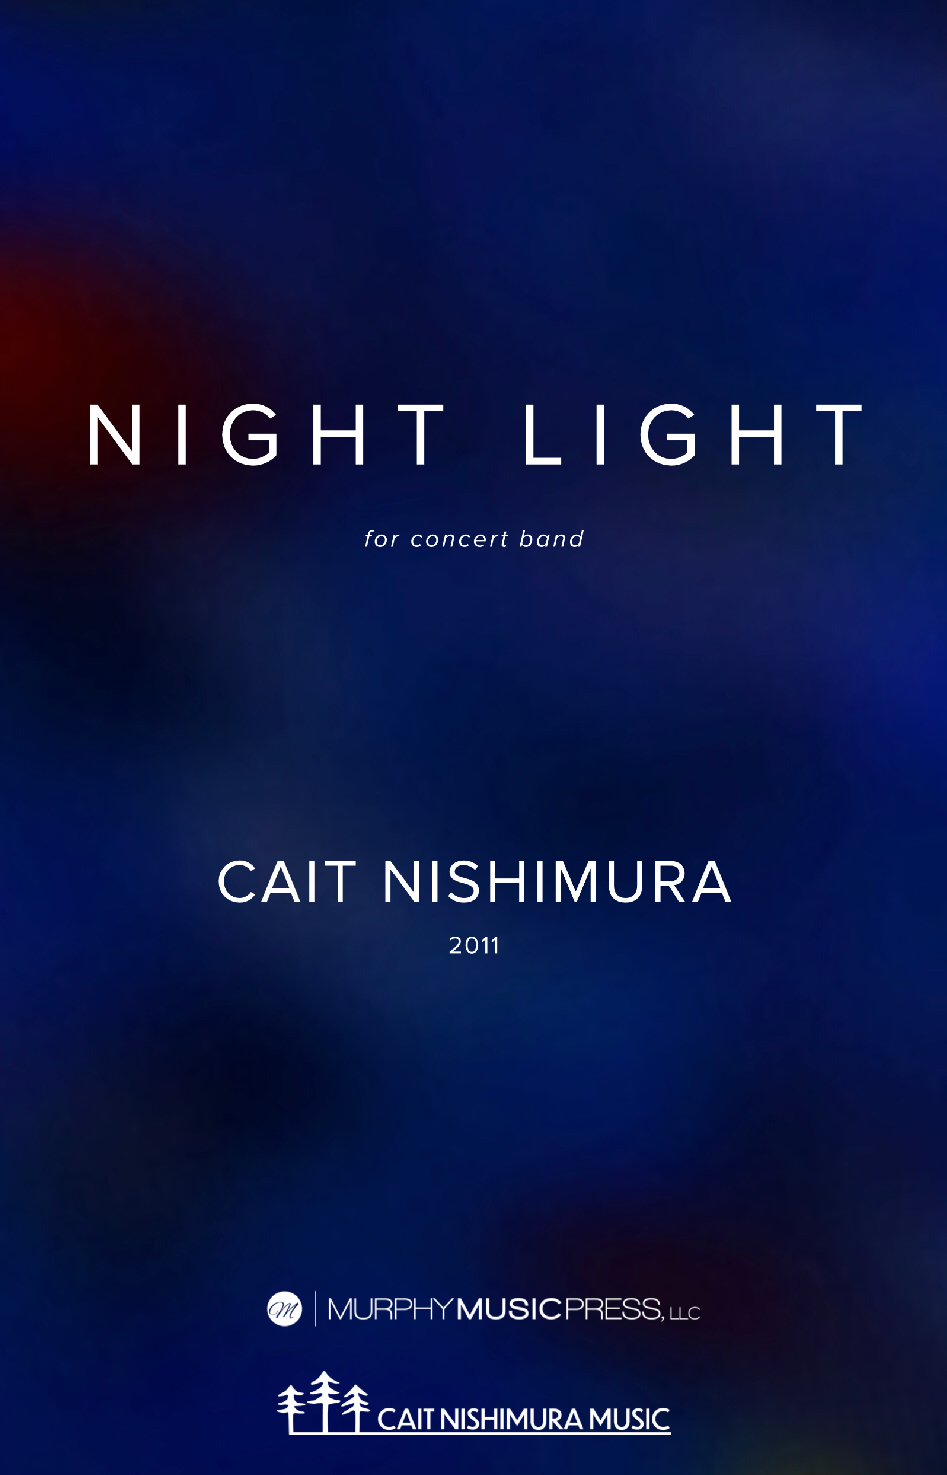 Nigh Light by Cait Nishimura